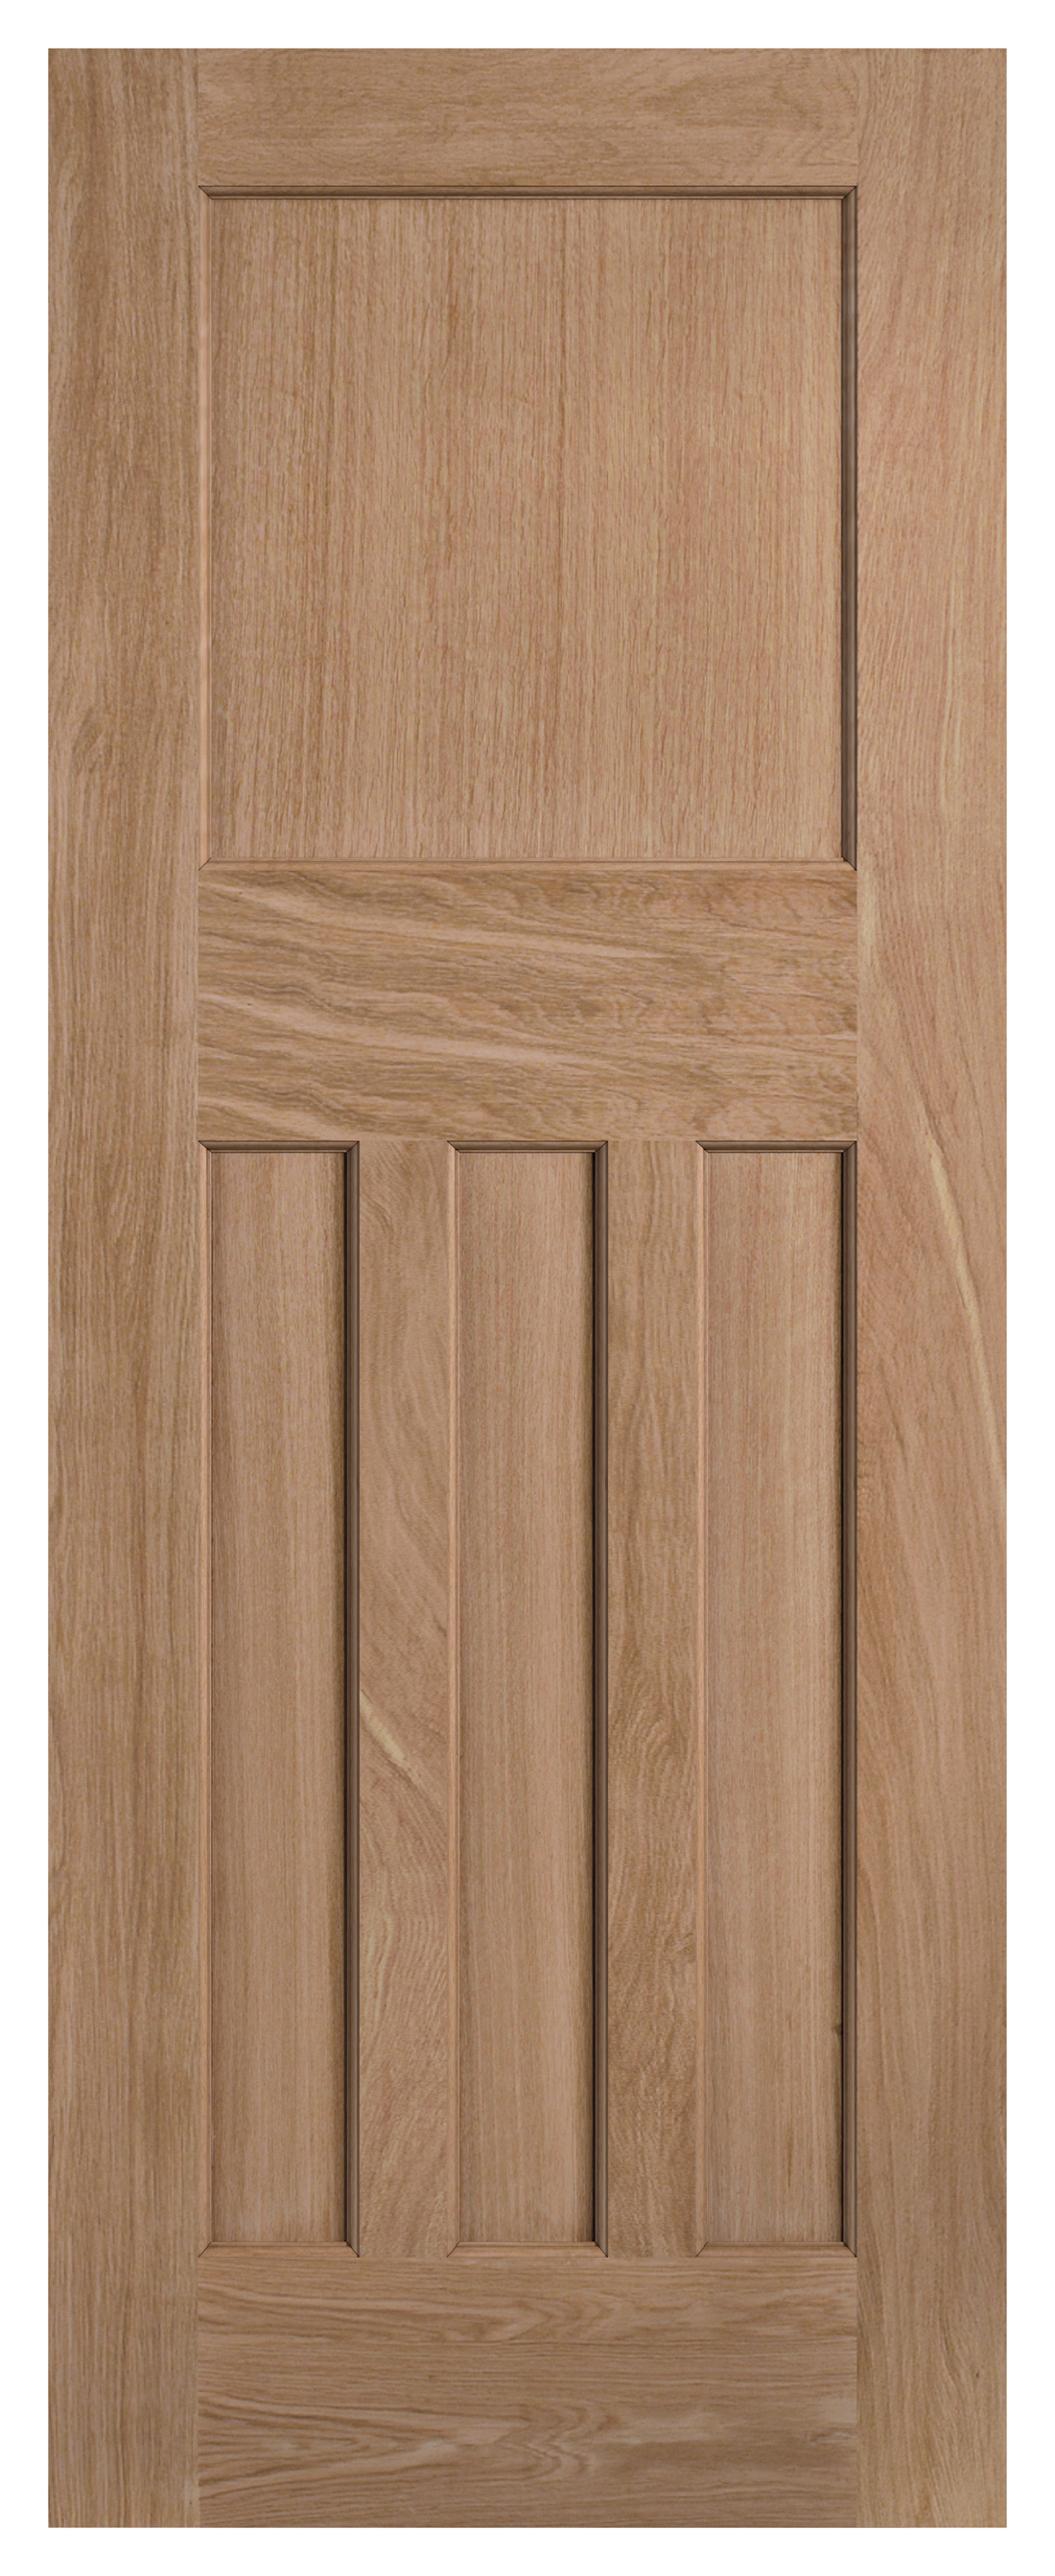 Image of LPD Internal DX 30s Unfinished Oak Solid Core Door - 838 x 1981mm